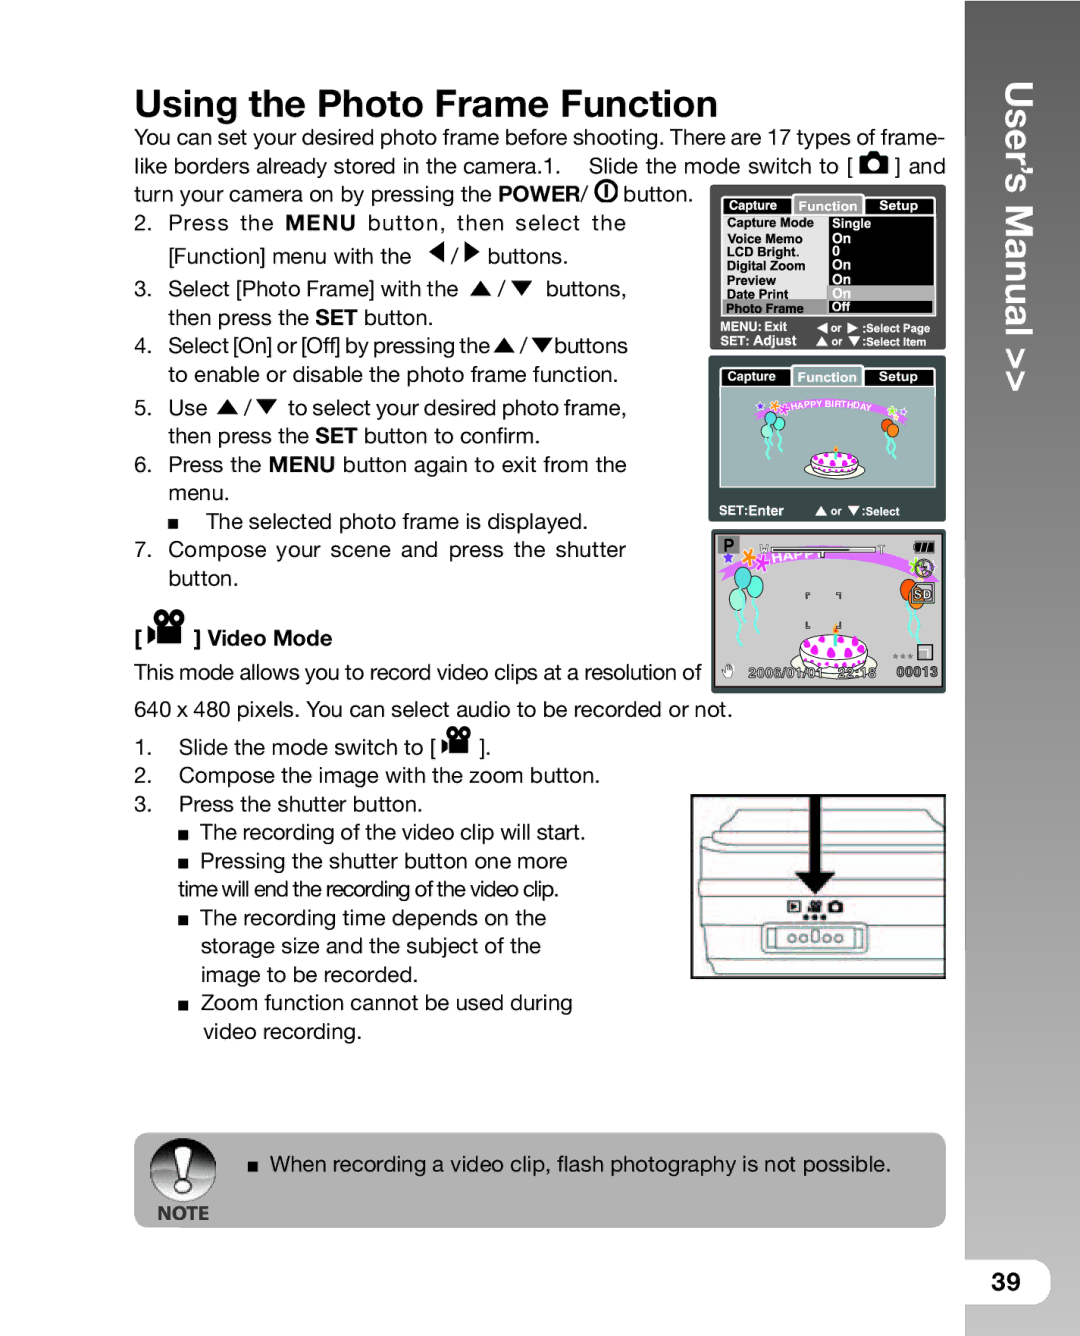 Sealife DC 600 manual Using the Photo Frame Function, User’s Manual 